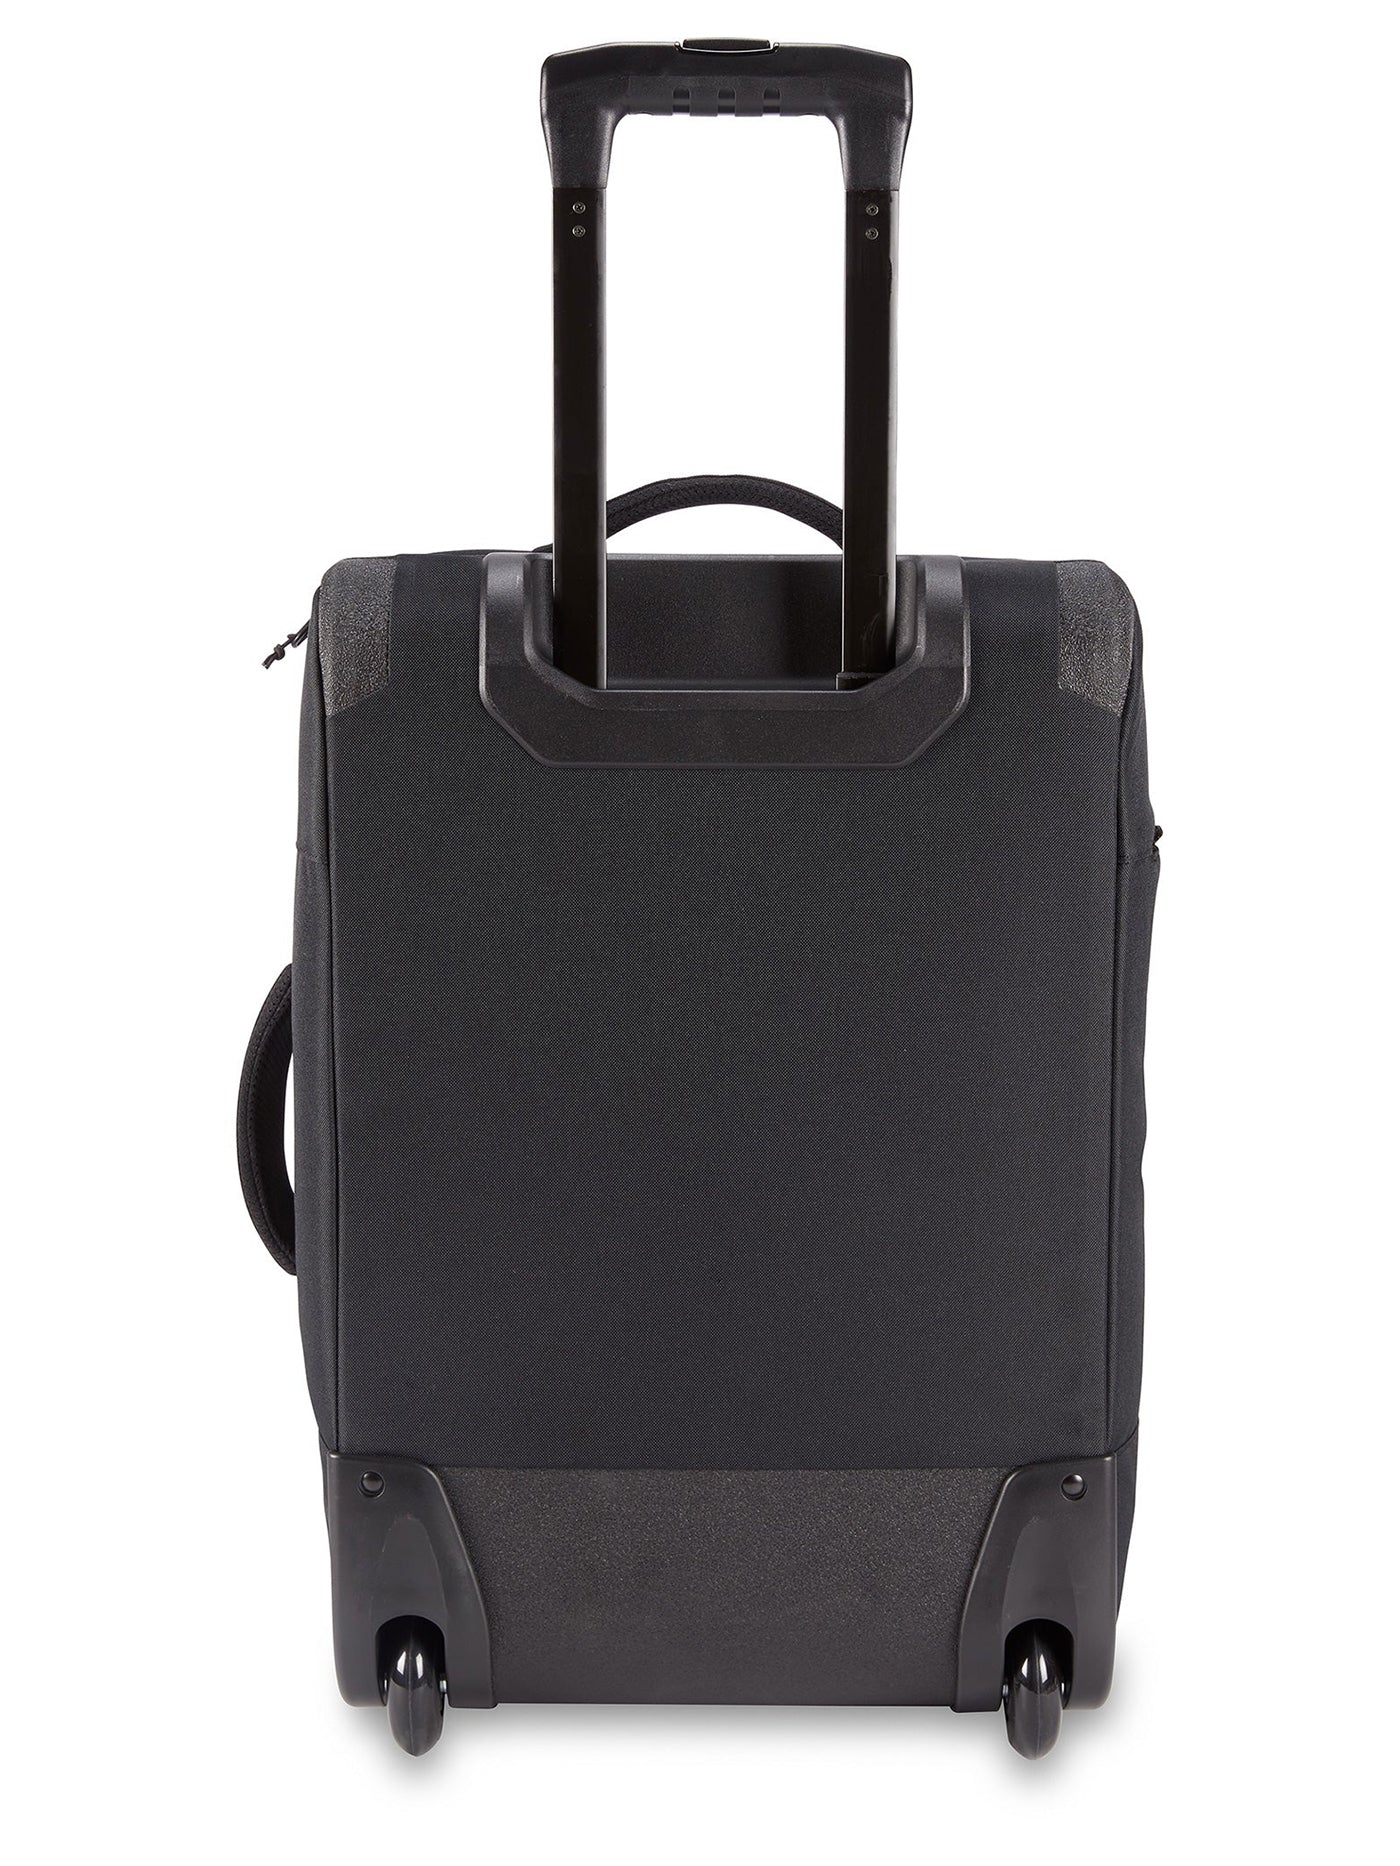 Dakine 365 Carry On Roller 40L Suitcase